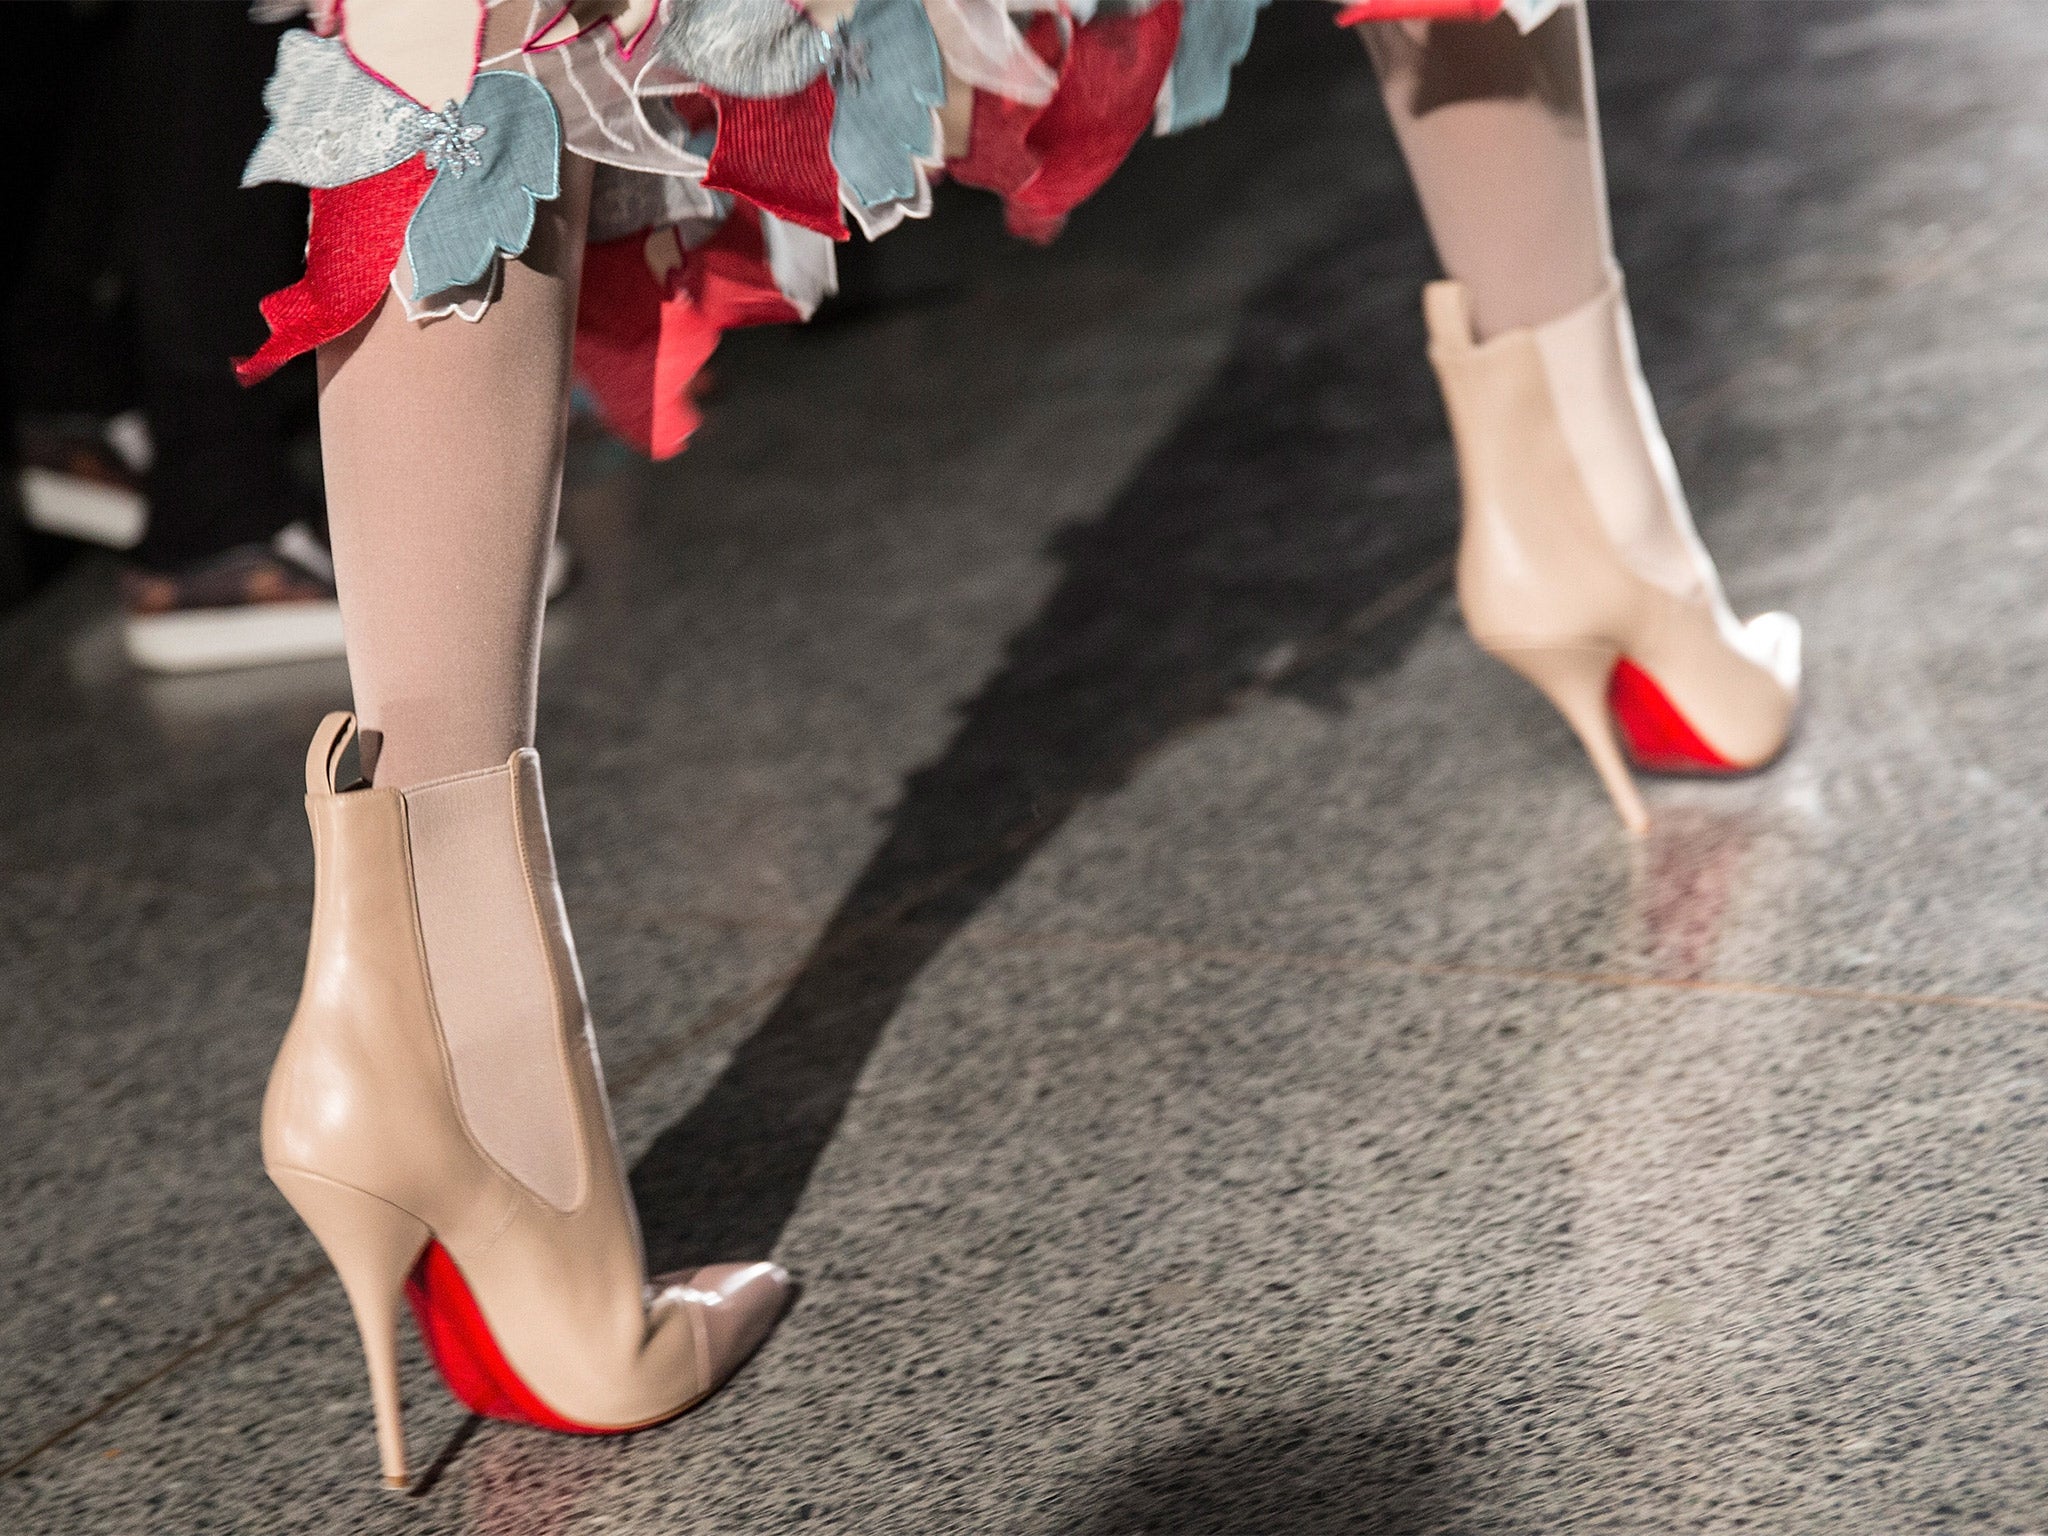 Brooklyn Museum: Killer Heels: The Art of the High-Heeled Shoe